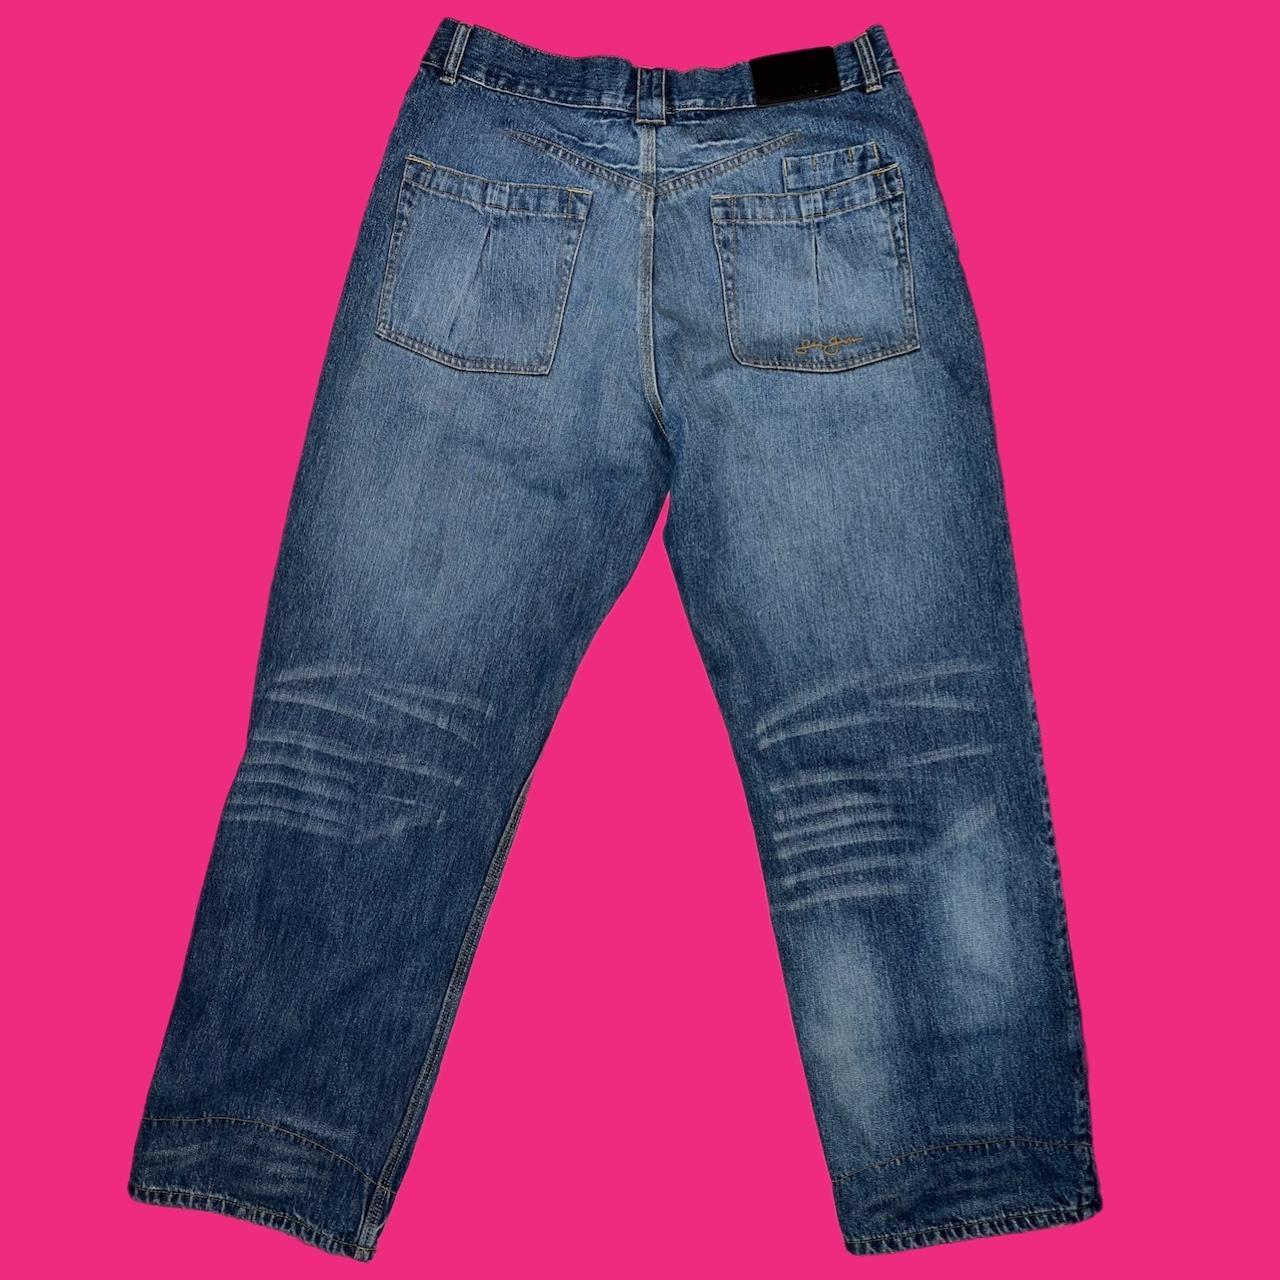 Sean John Men's Jeans (2)